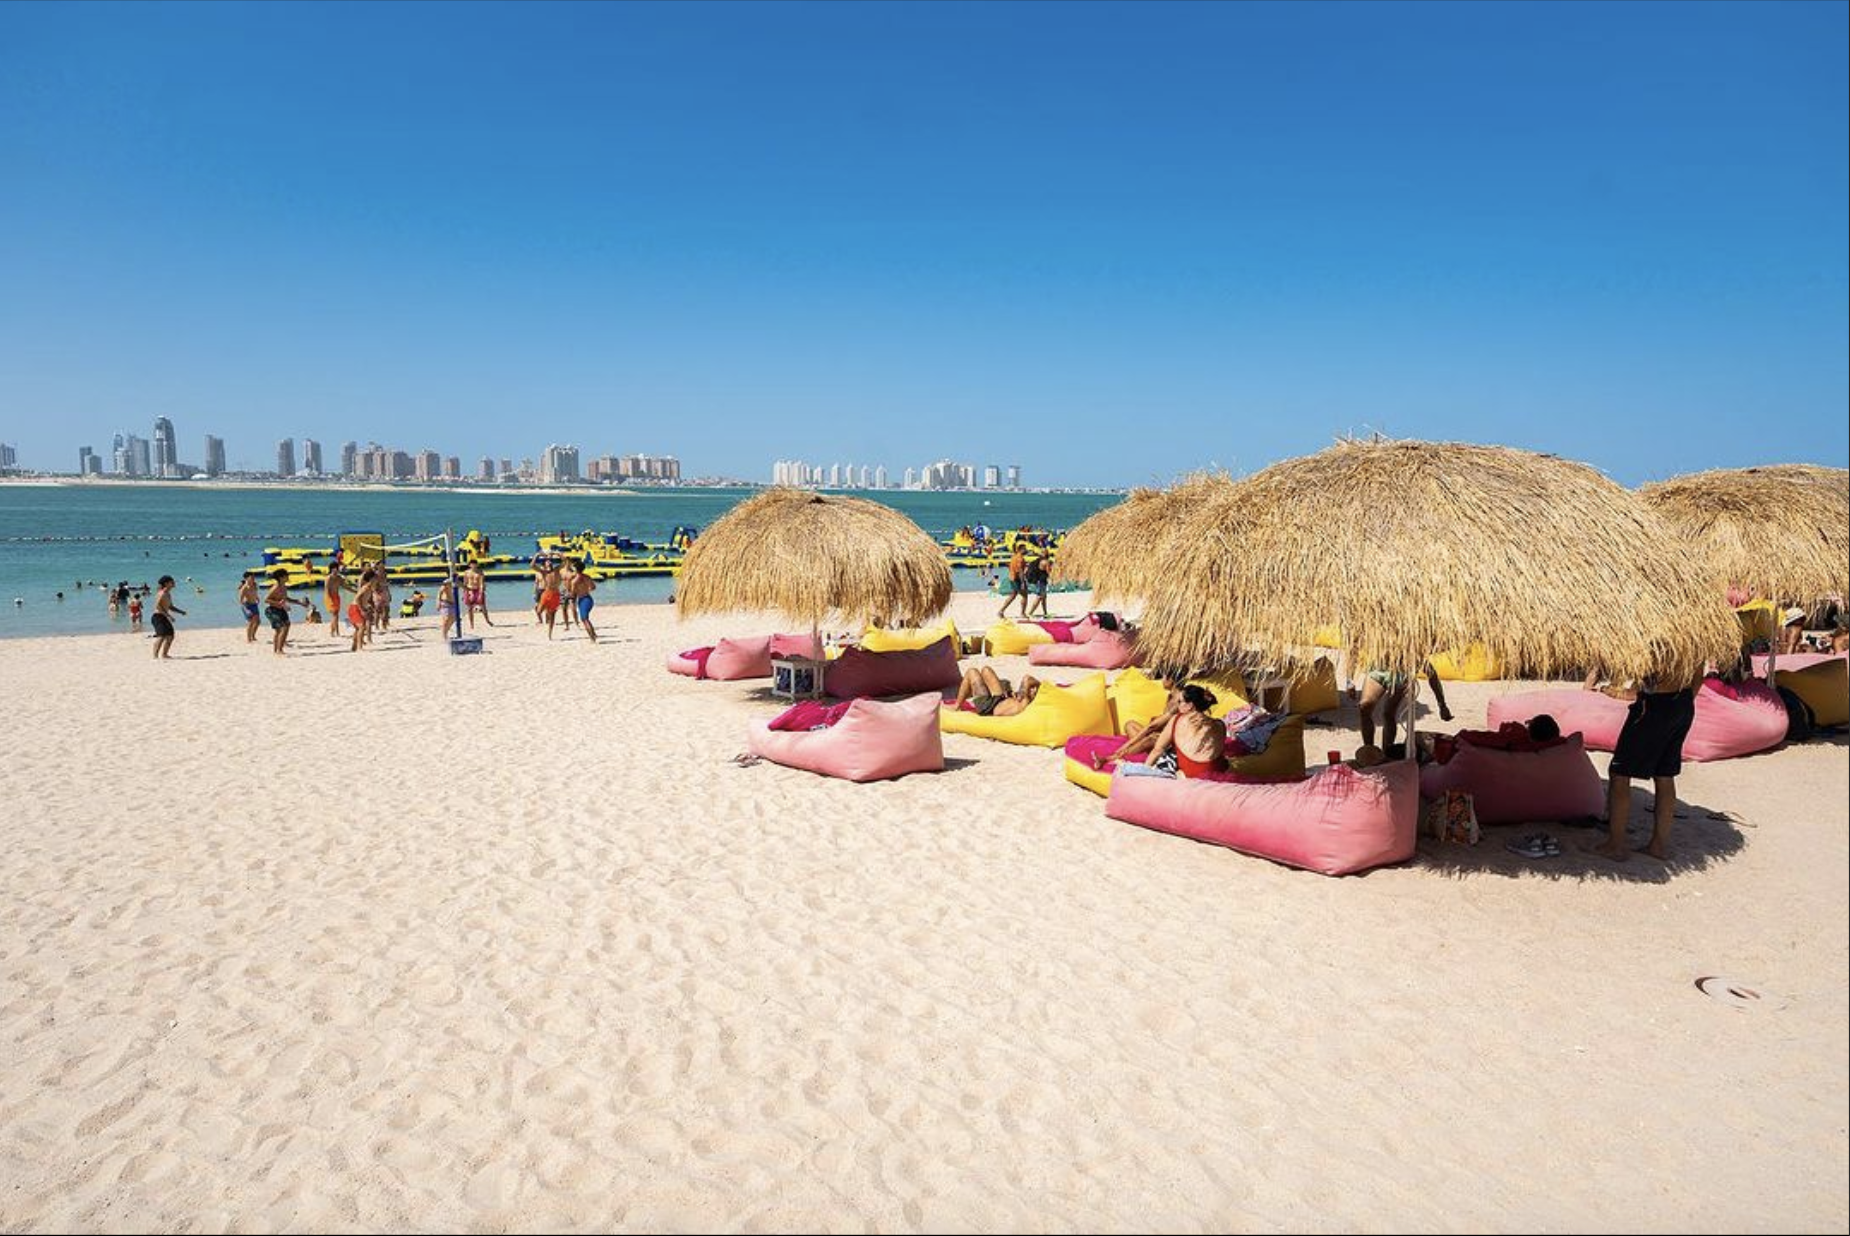 Qatar Tourism renews licence for popular West Bay beaches